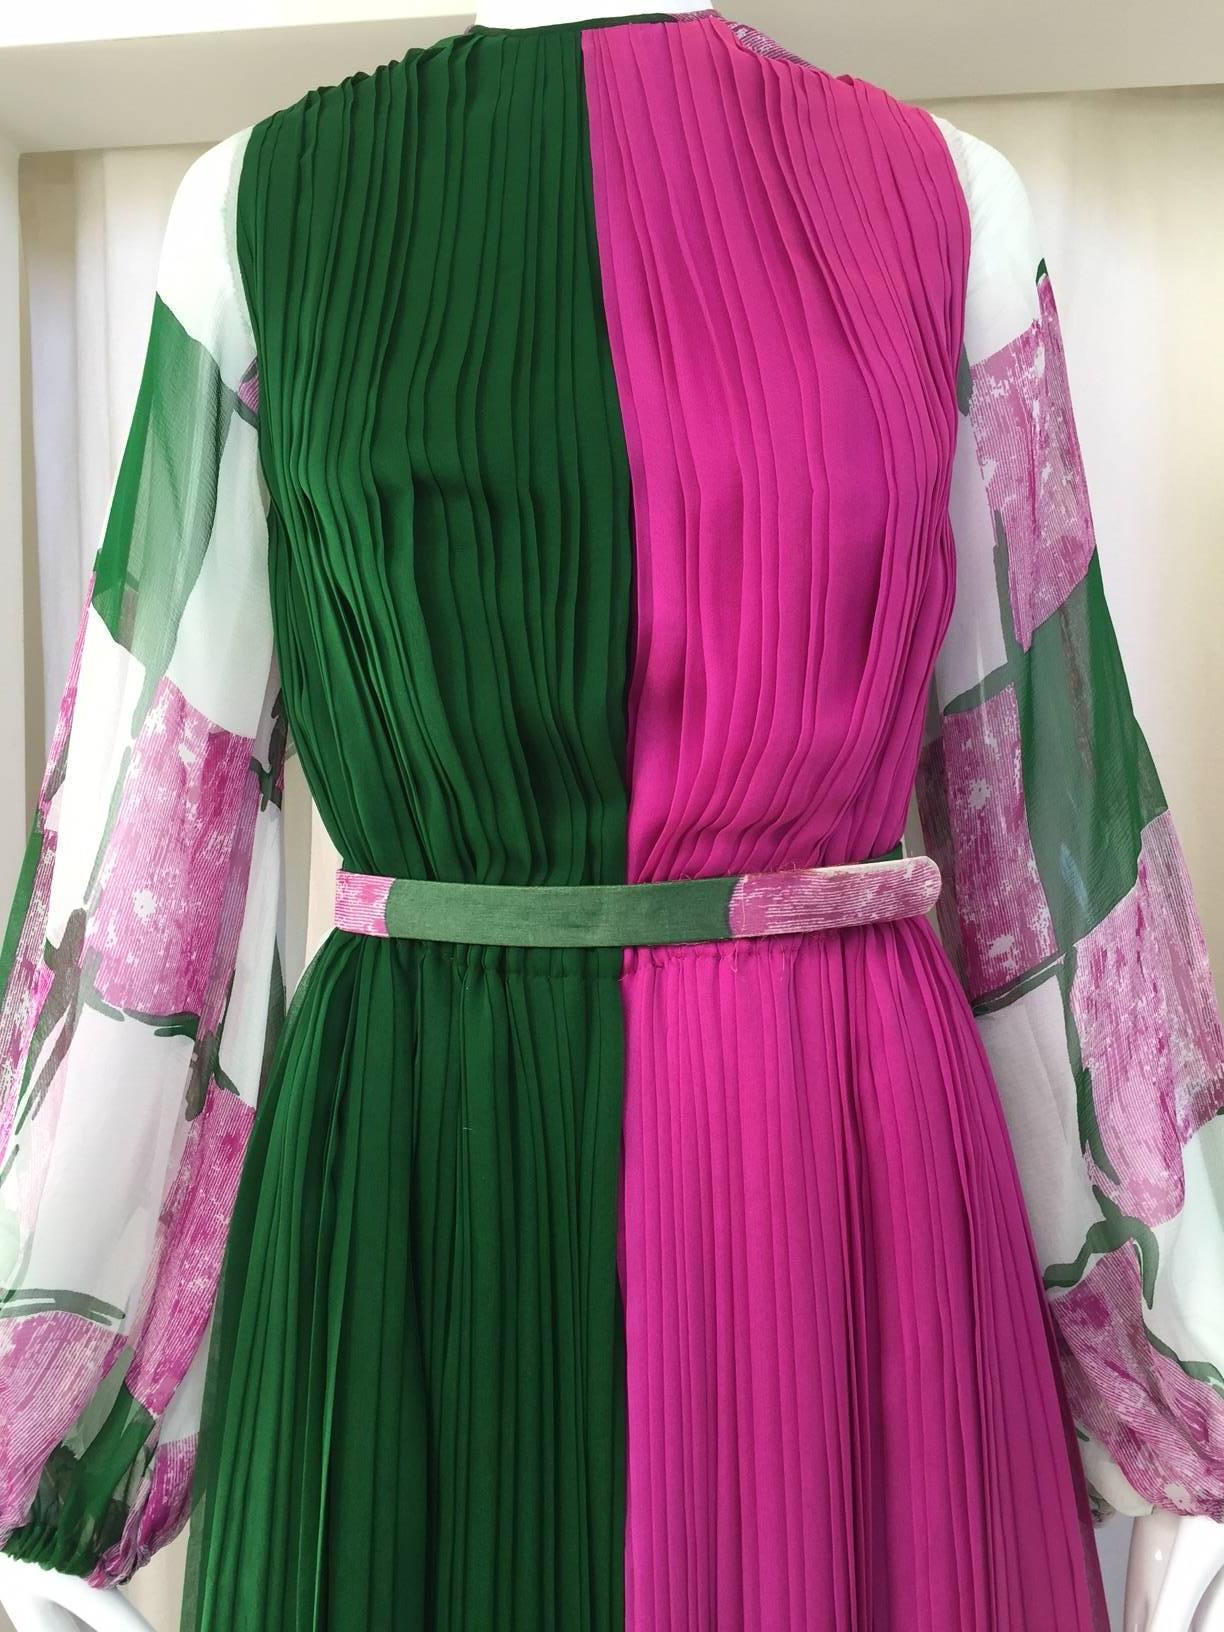 1970s GALANOS silk pleated dress.
Size 2/4
Bust: 32